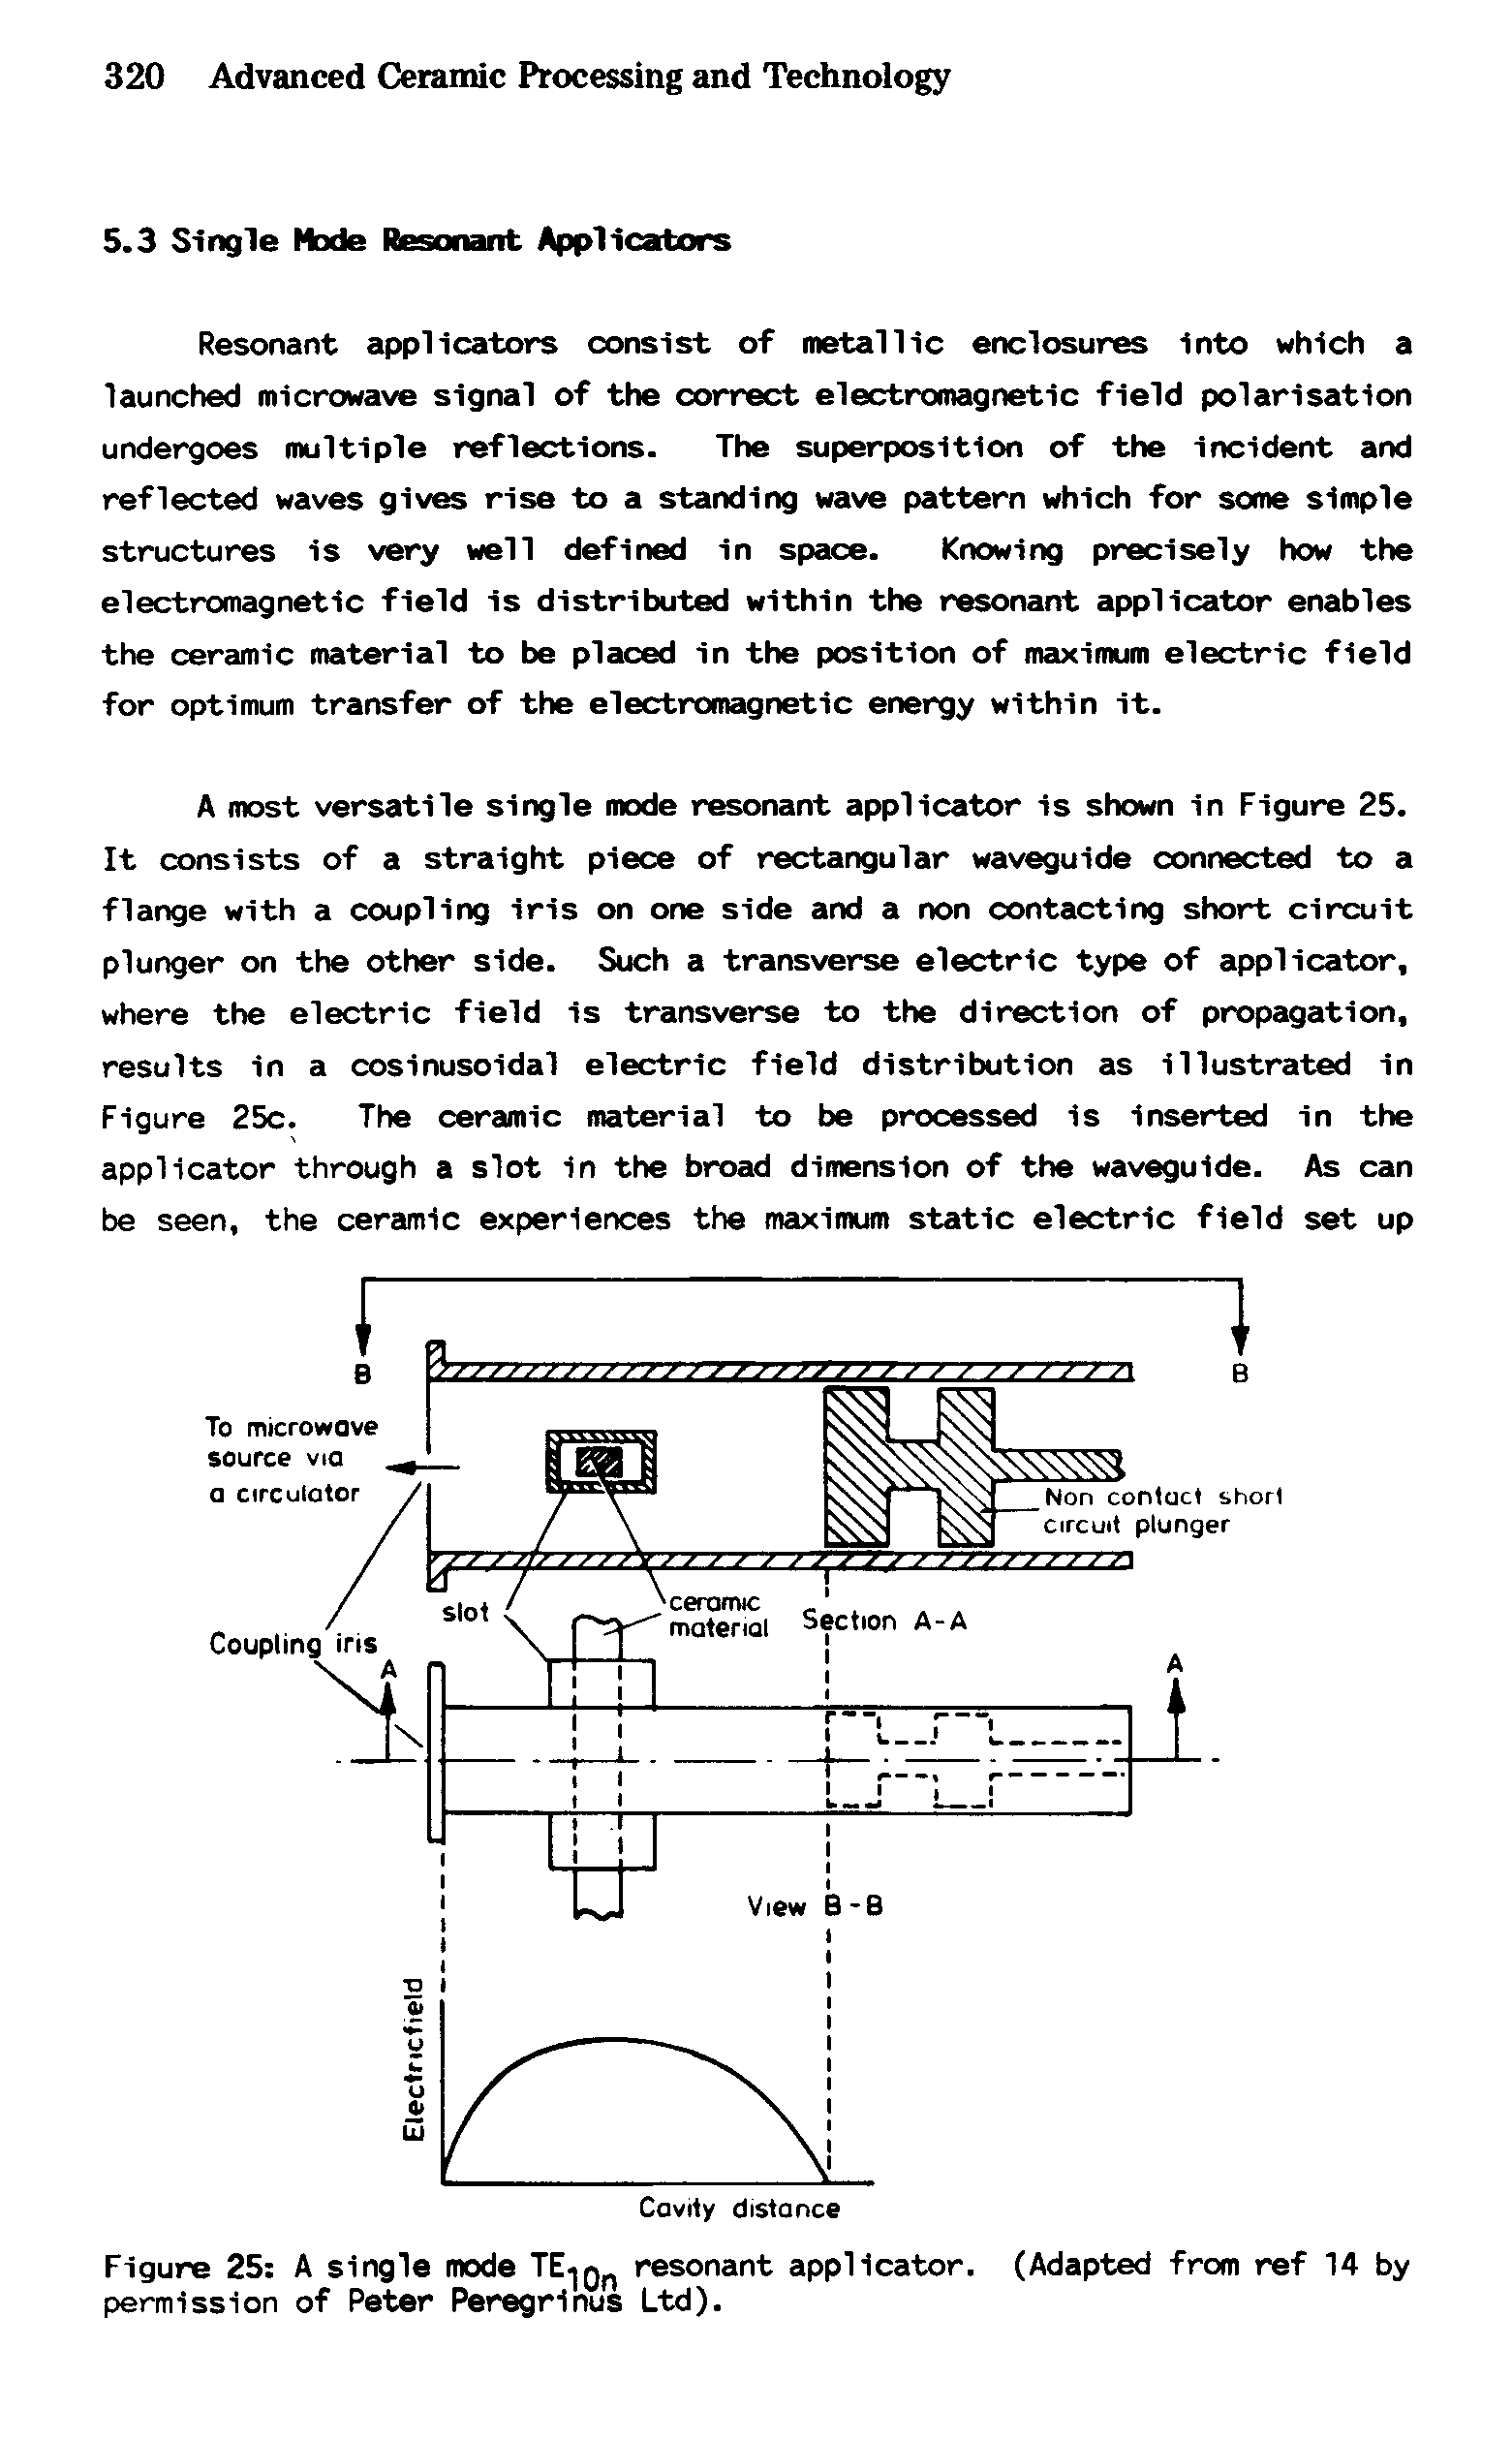 Figure 25 A single mode TE. Qj, resonant applicator, permission of Peter Peregrinus Ltd).